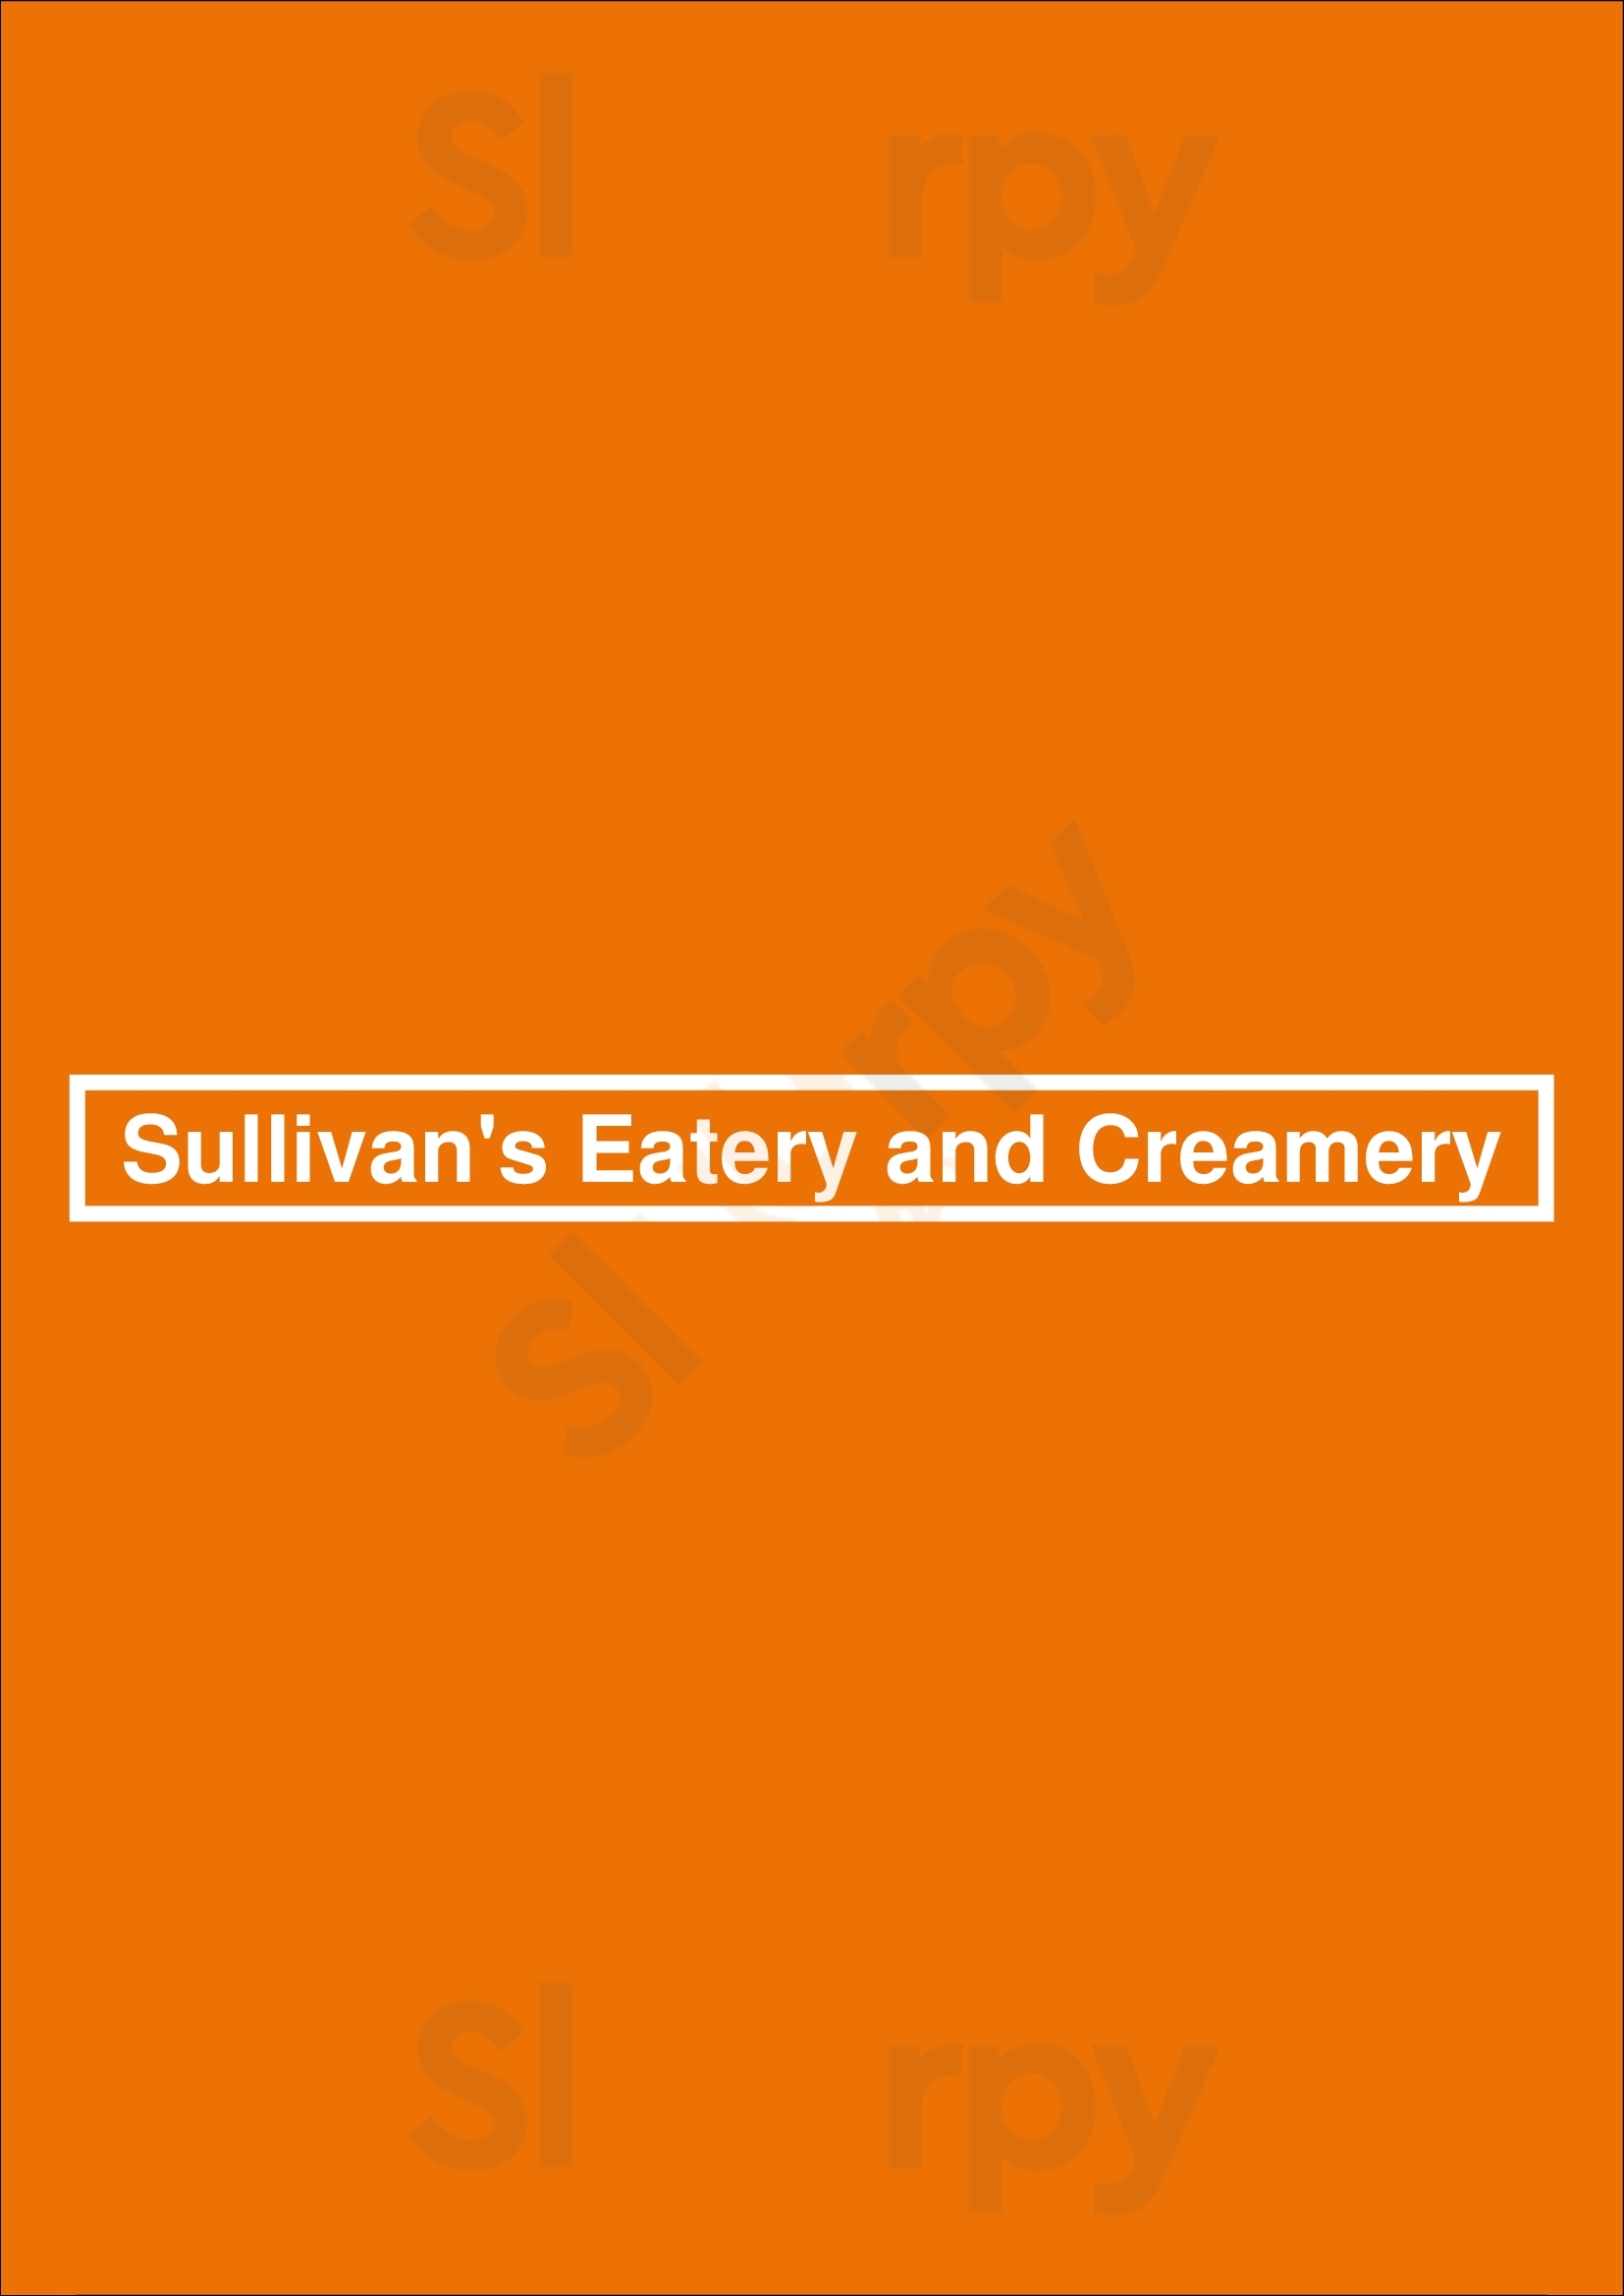 Sullivan's Eatery & Creamery Tucson Menu - 1